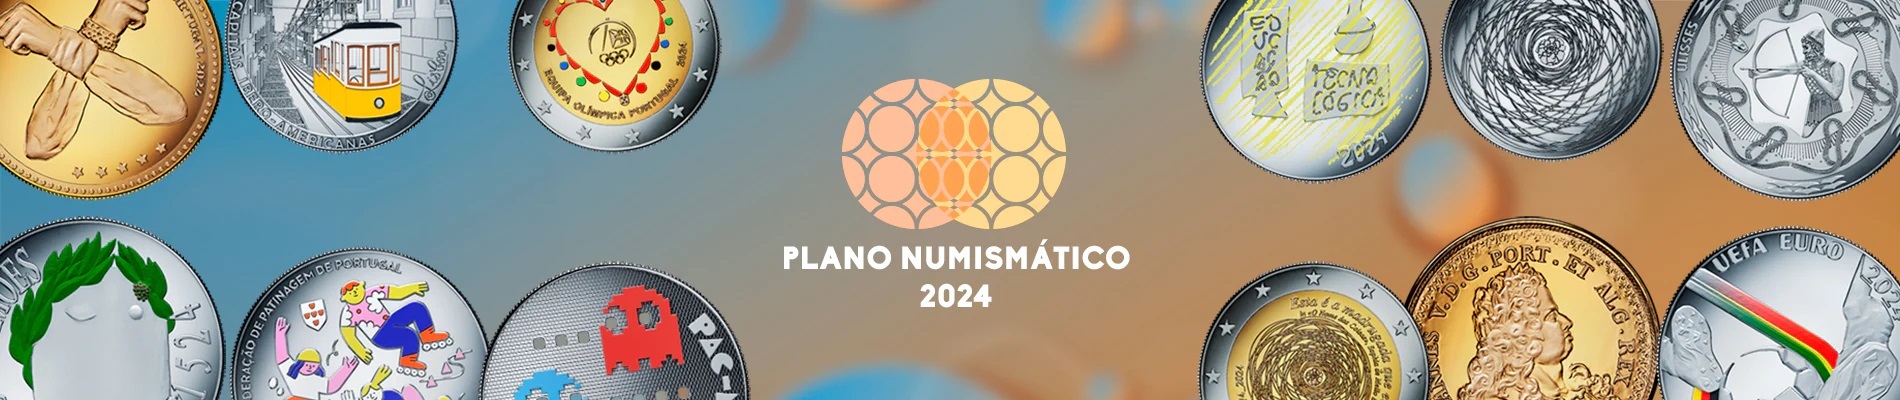 Portugal numismatic program 2024 (shop illustration) (zoom)